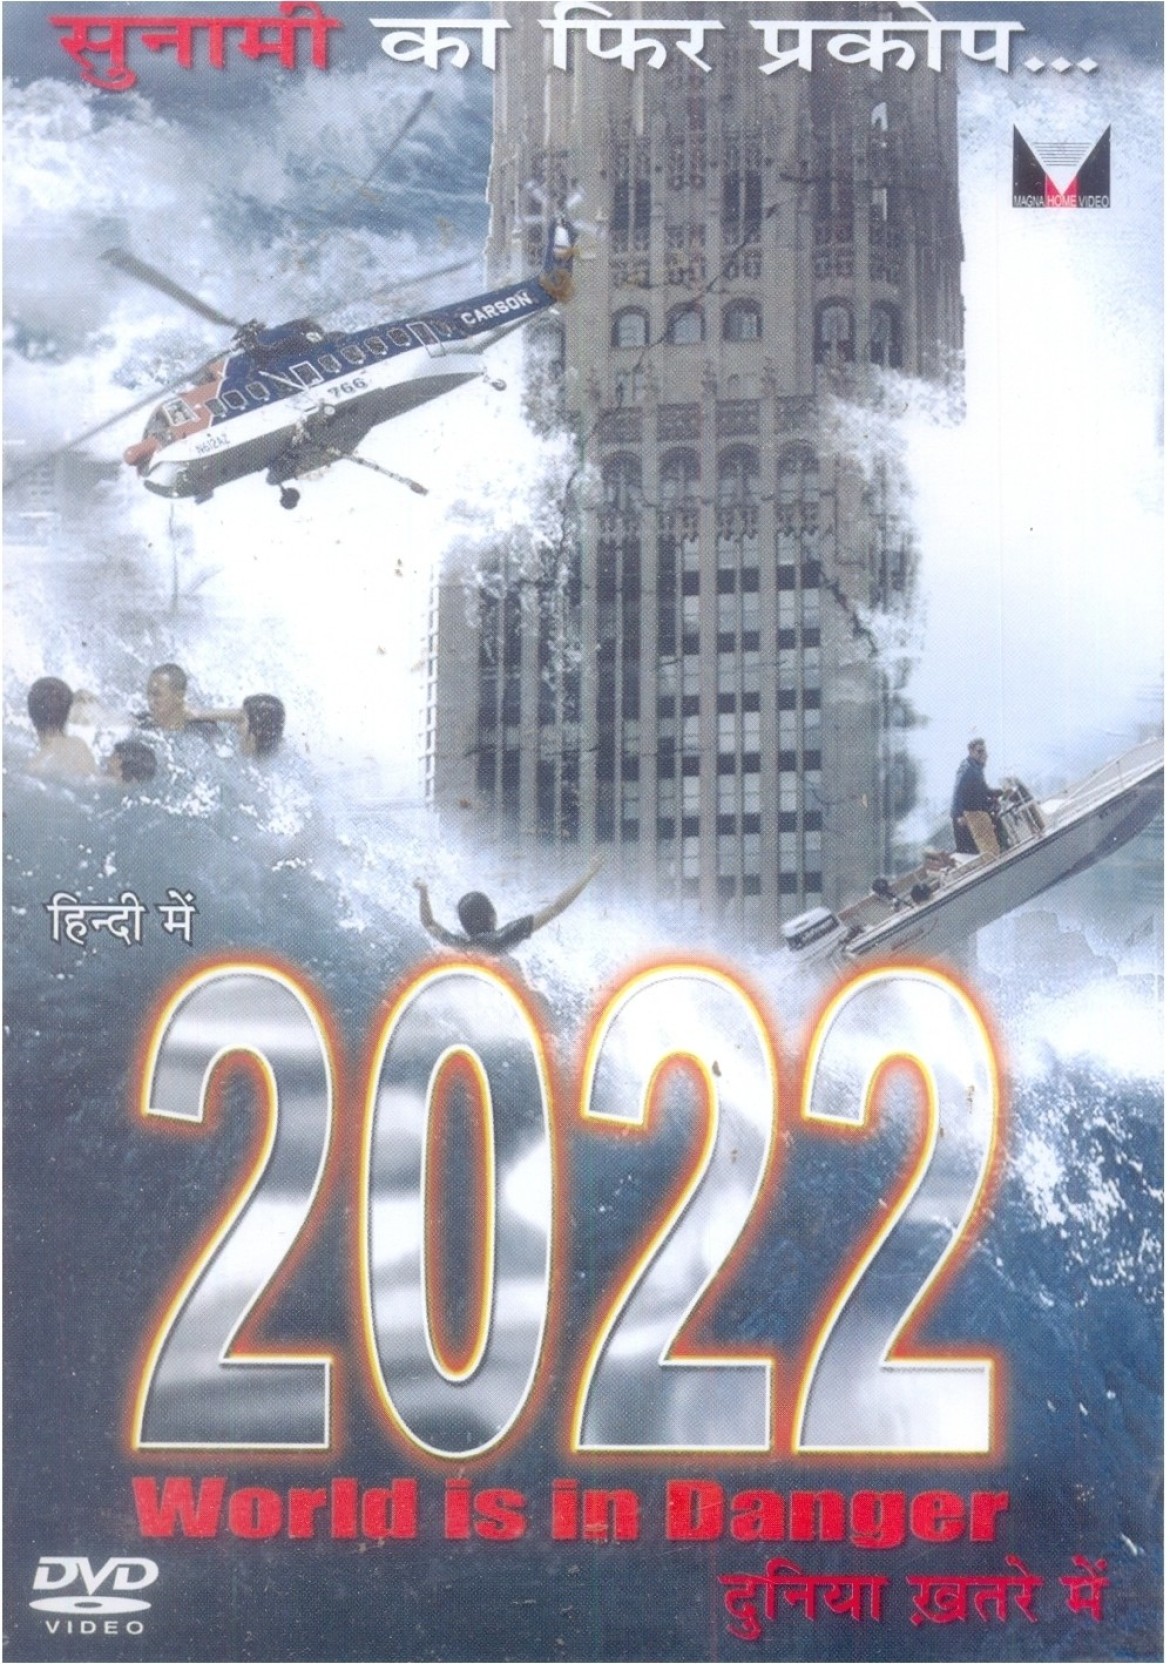 Tsunami 2022 Price in India - Buy Tsunami 2022 online at Flipkart.com